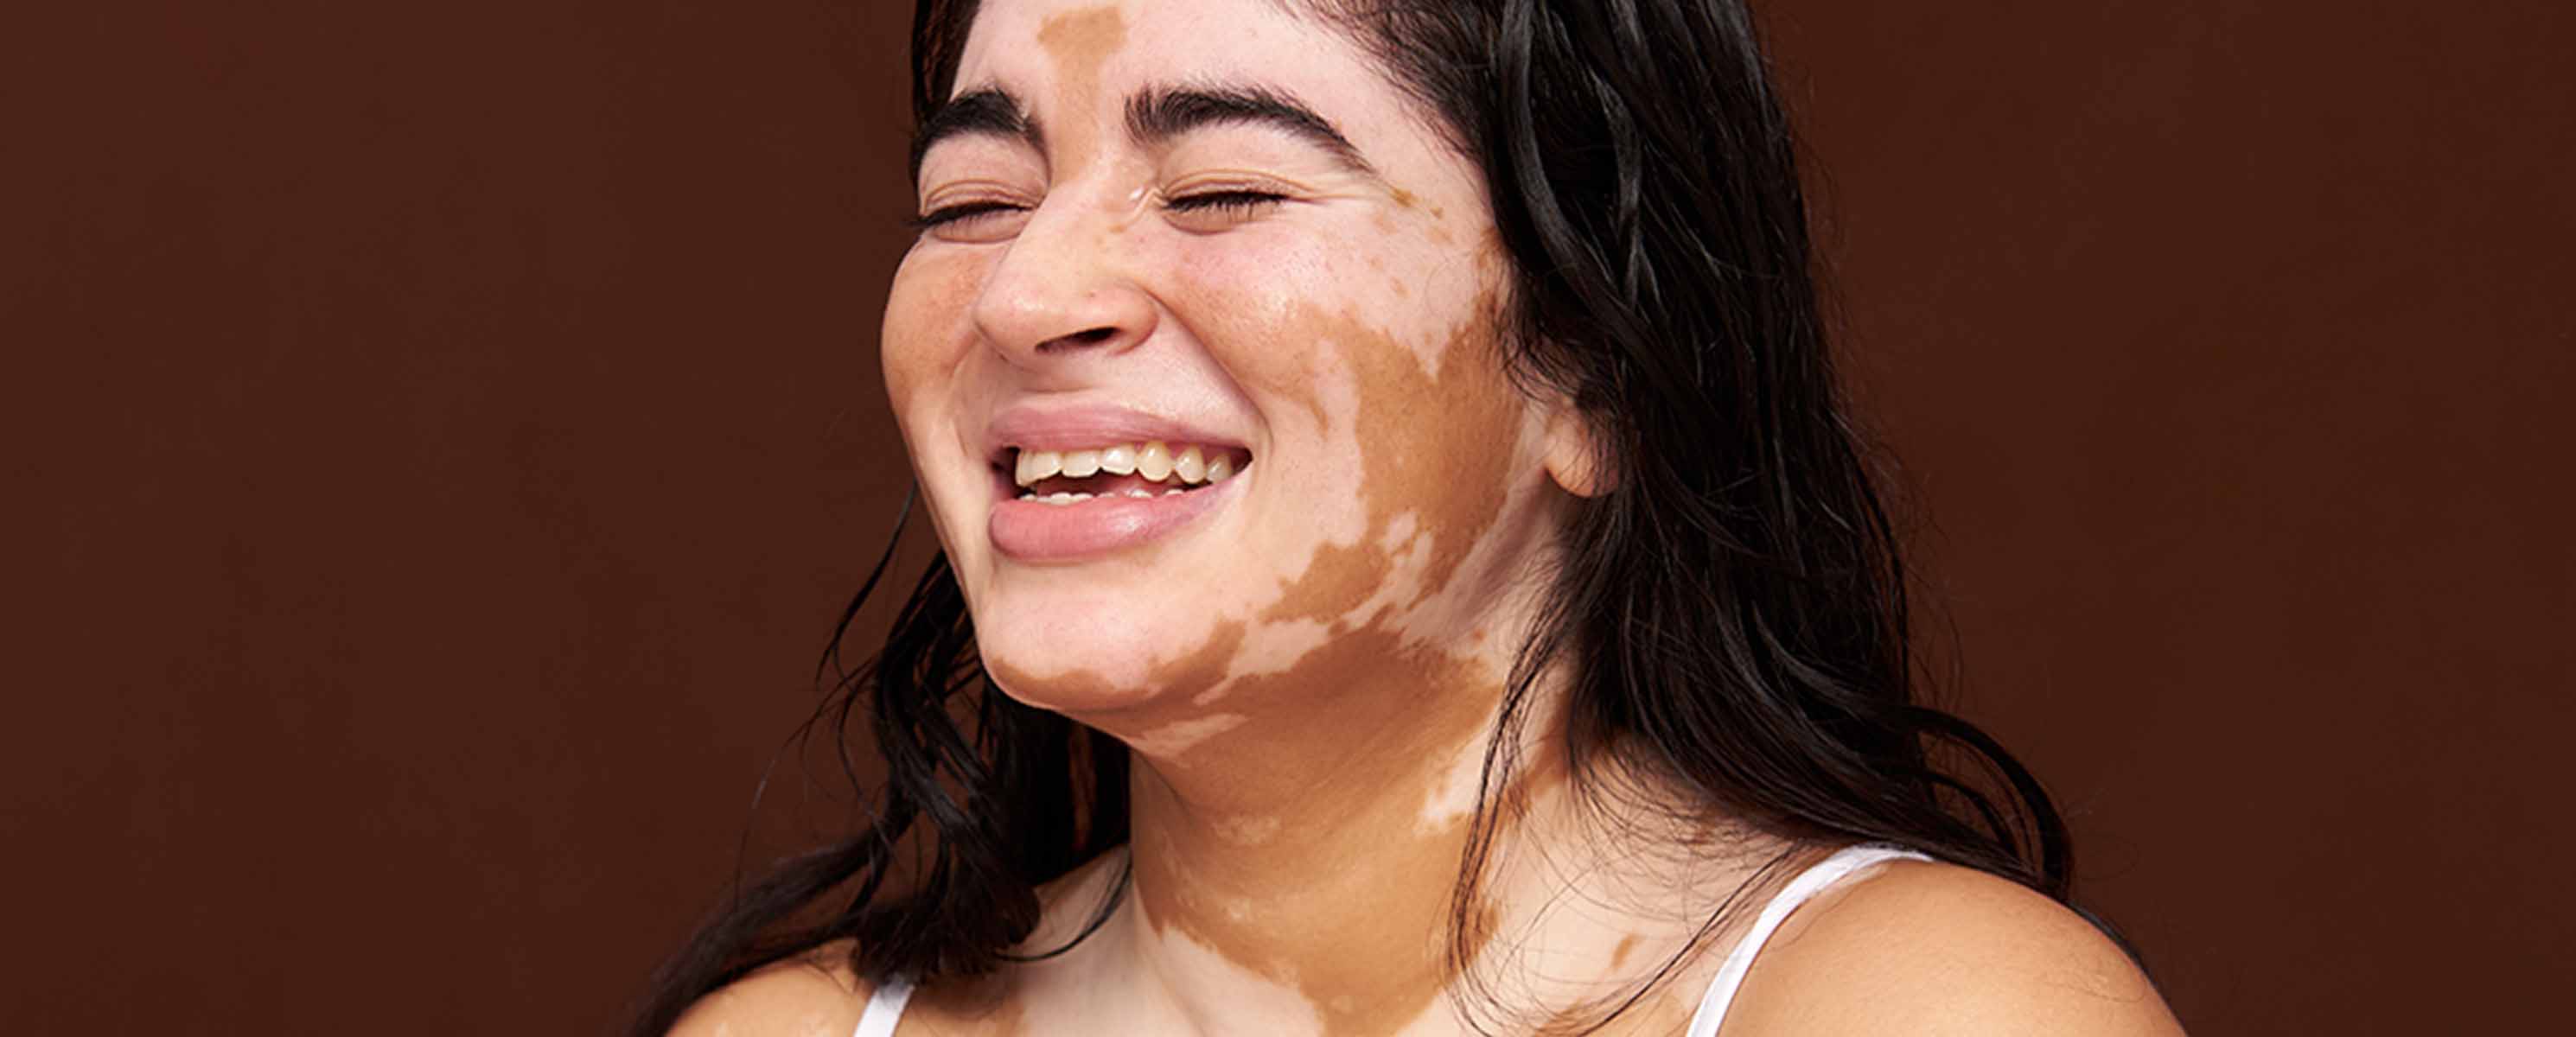 Young woman with vitiligo smiling